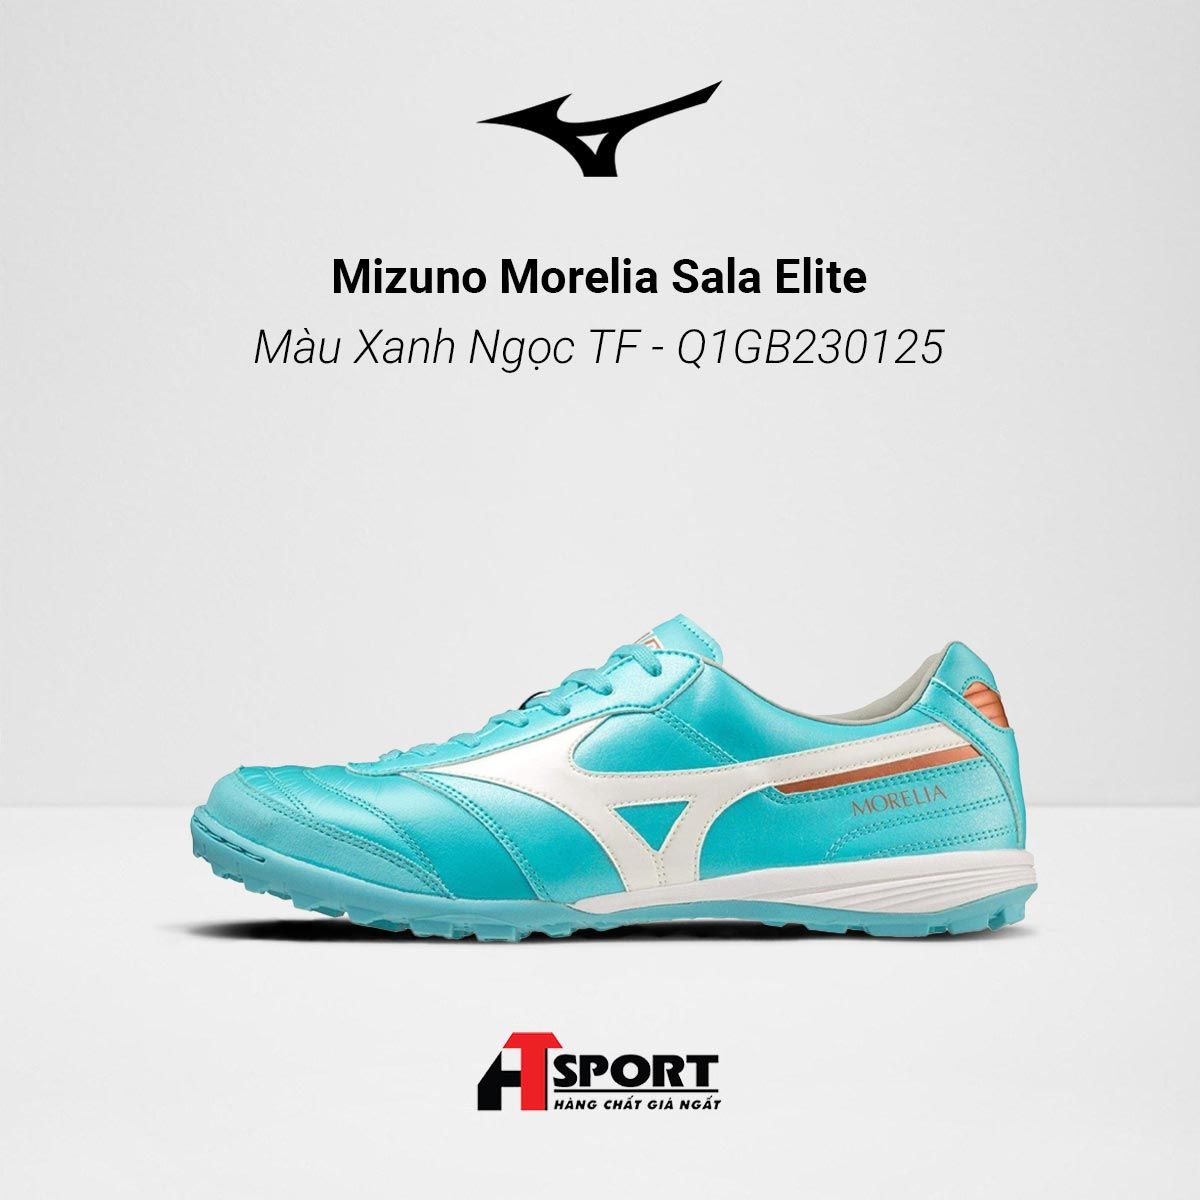  Mizuno Morelia Sala Elite - Màu Xanh Ngọc TF - Q1GB230125 